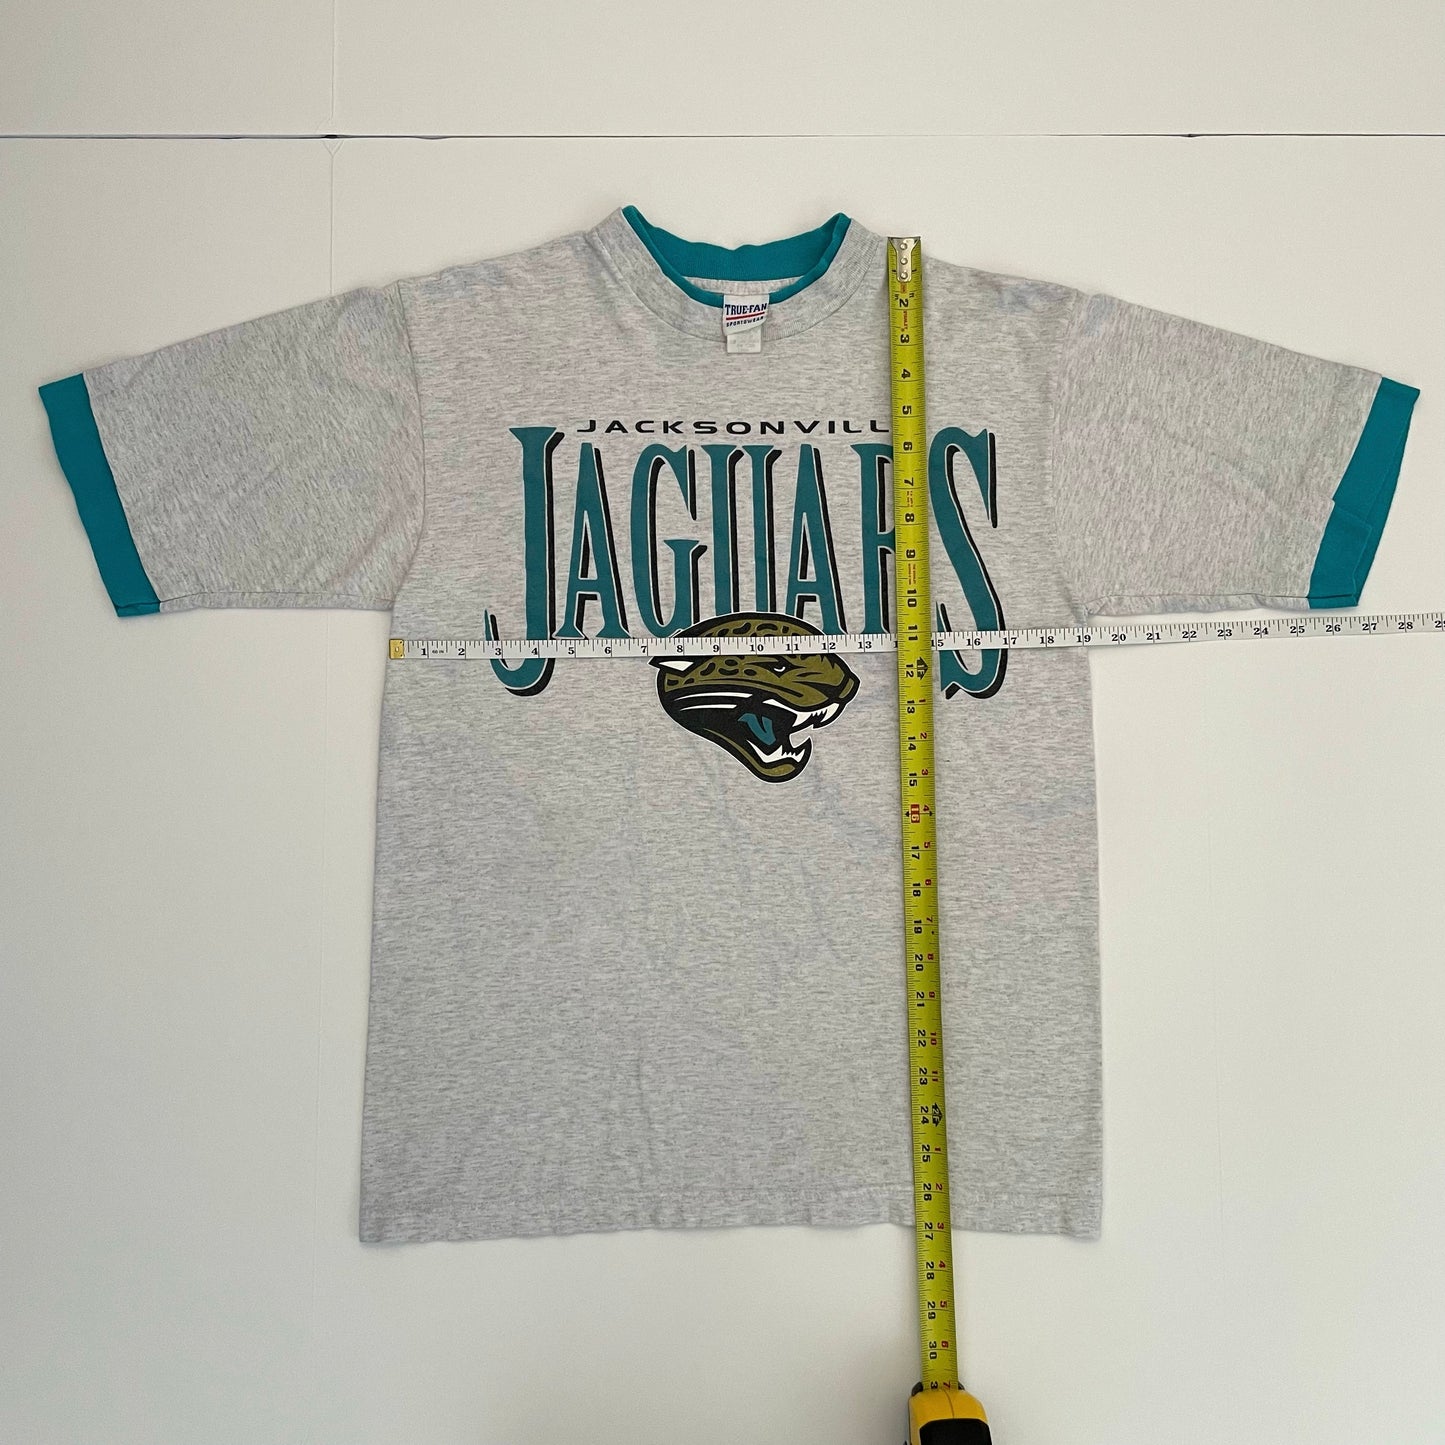 Vintage Jacksonville Jaguars shirt size SMALL